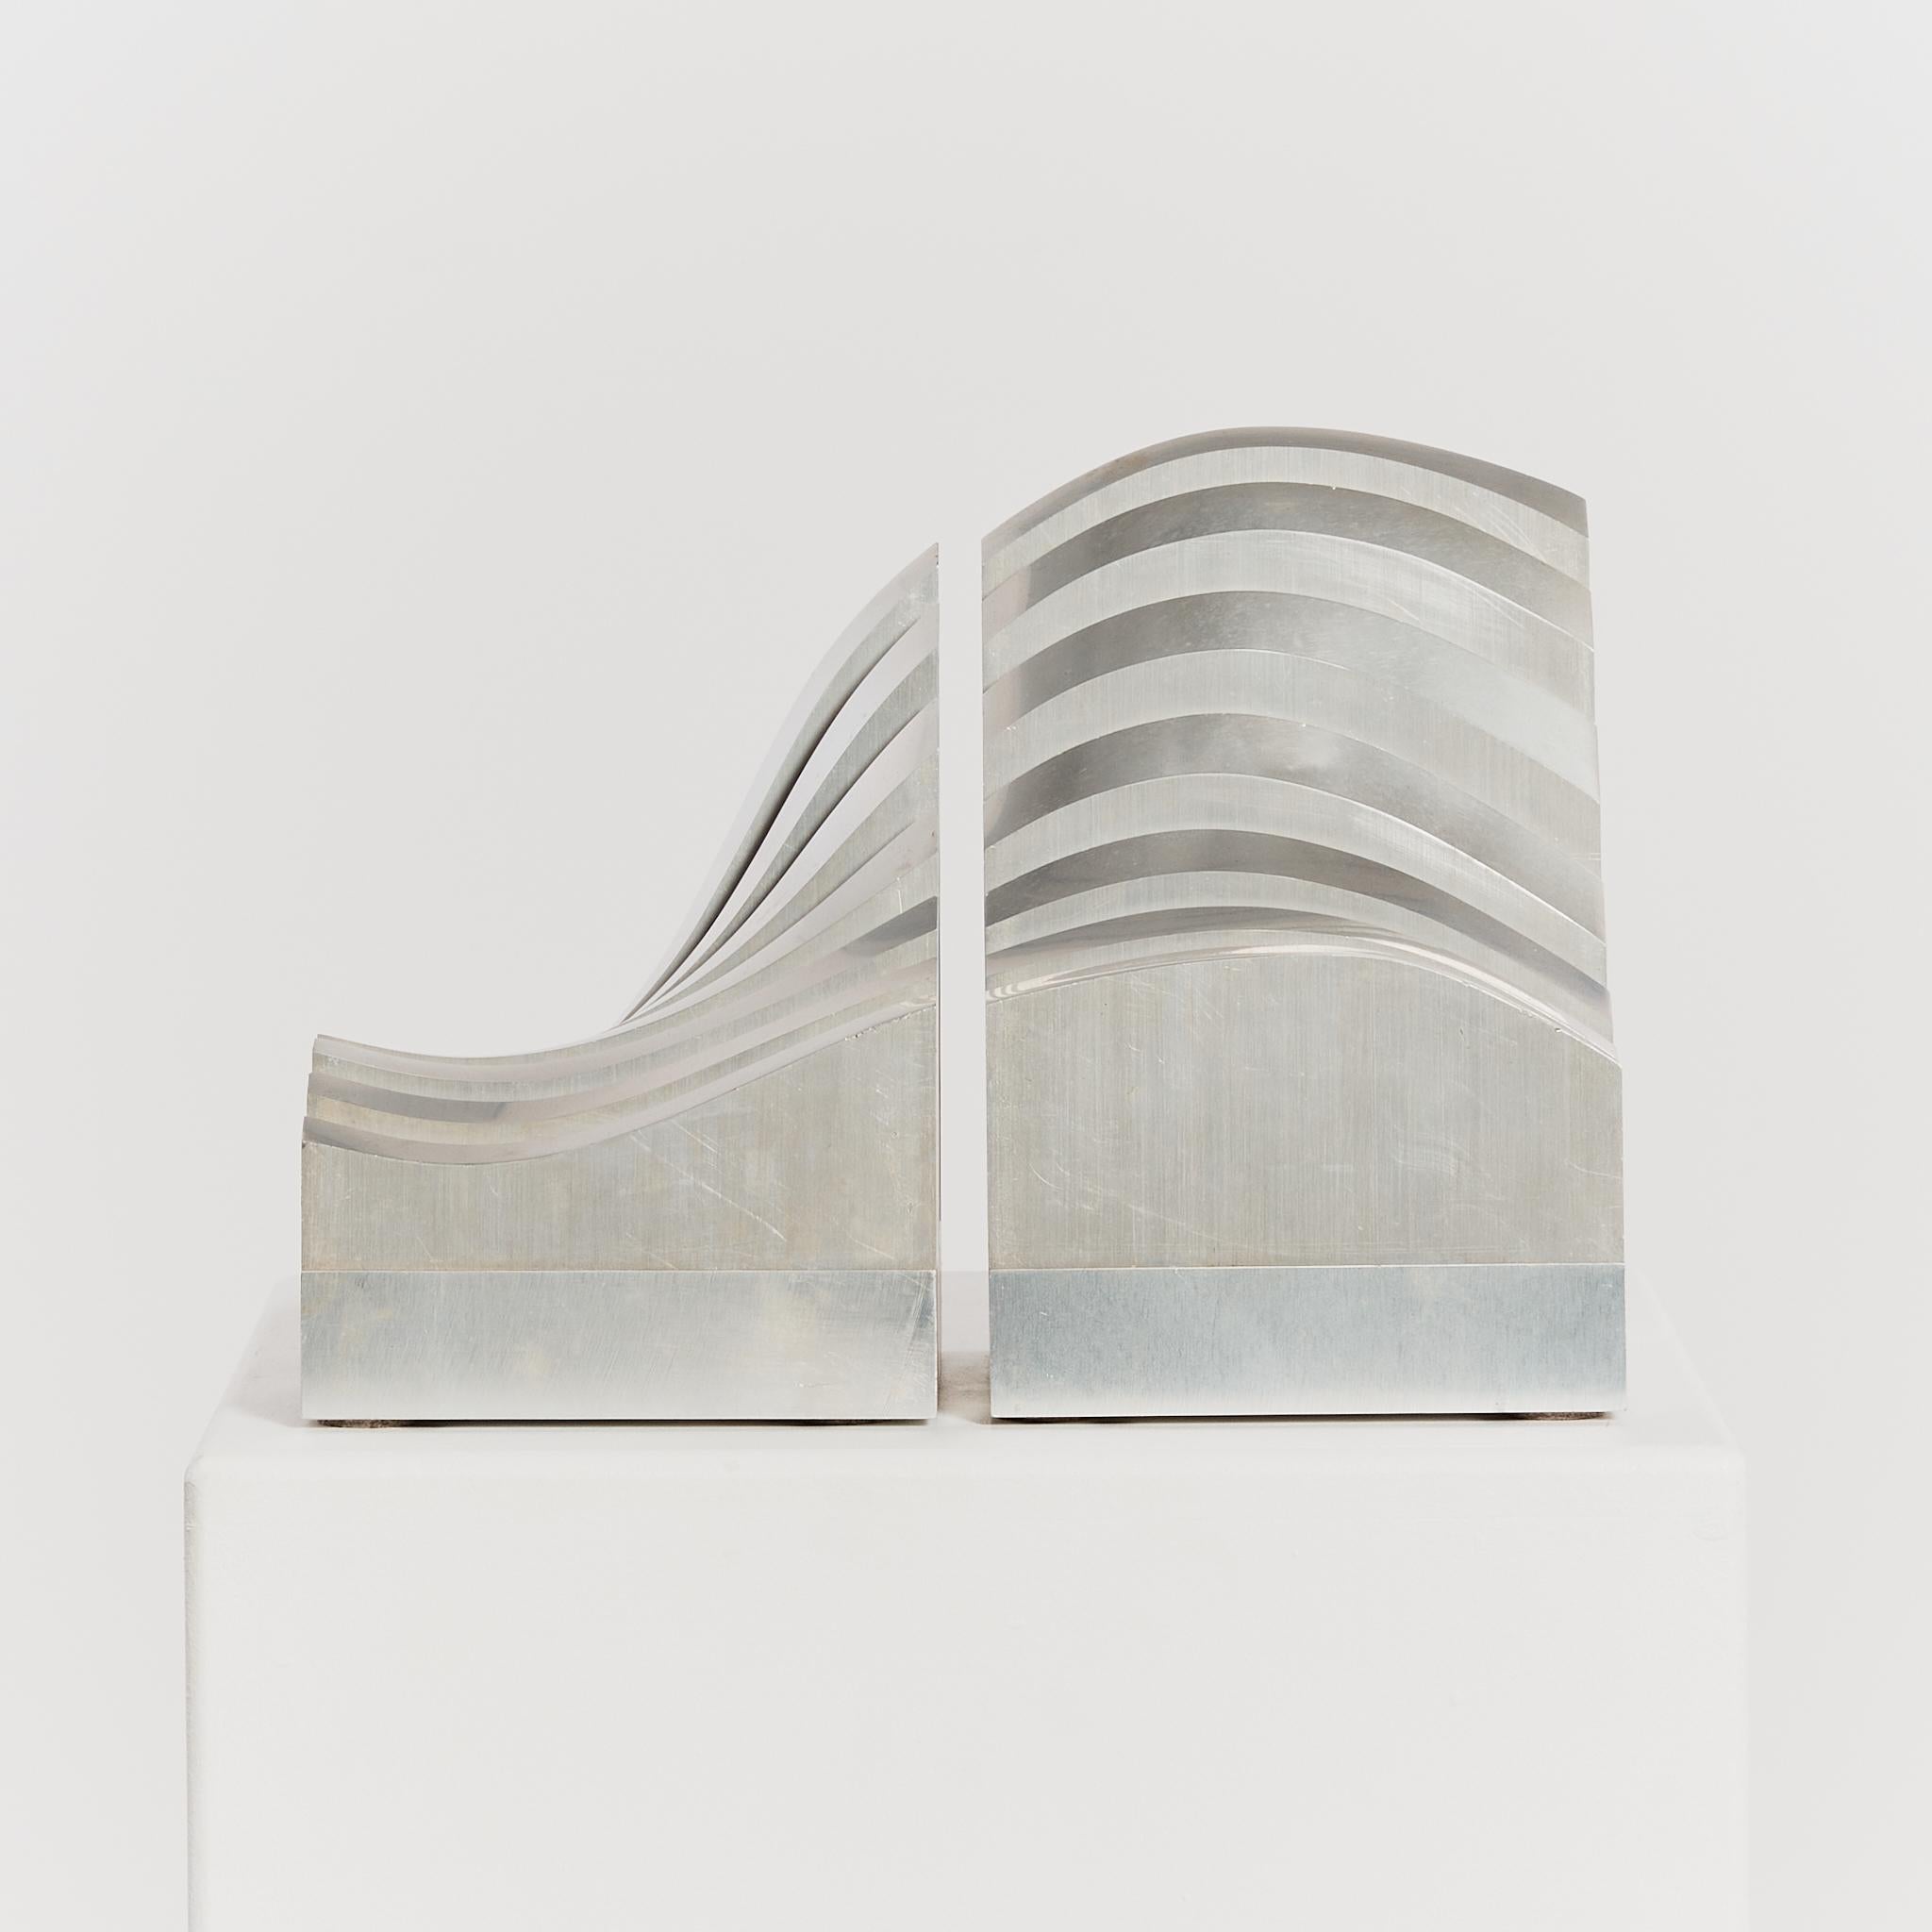 Undulating aluminium sculptures in two parts by Jiro Sugawara (b. 1941).

Origin: Japan

Artist: Jiro Sugawara

Year: 1979

Material: Aluminium

Dimensions: Approx H21 x W14.5 x D14.5cm each

Condition: Good vintage condition